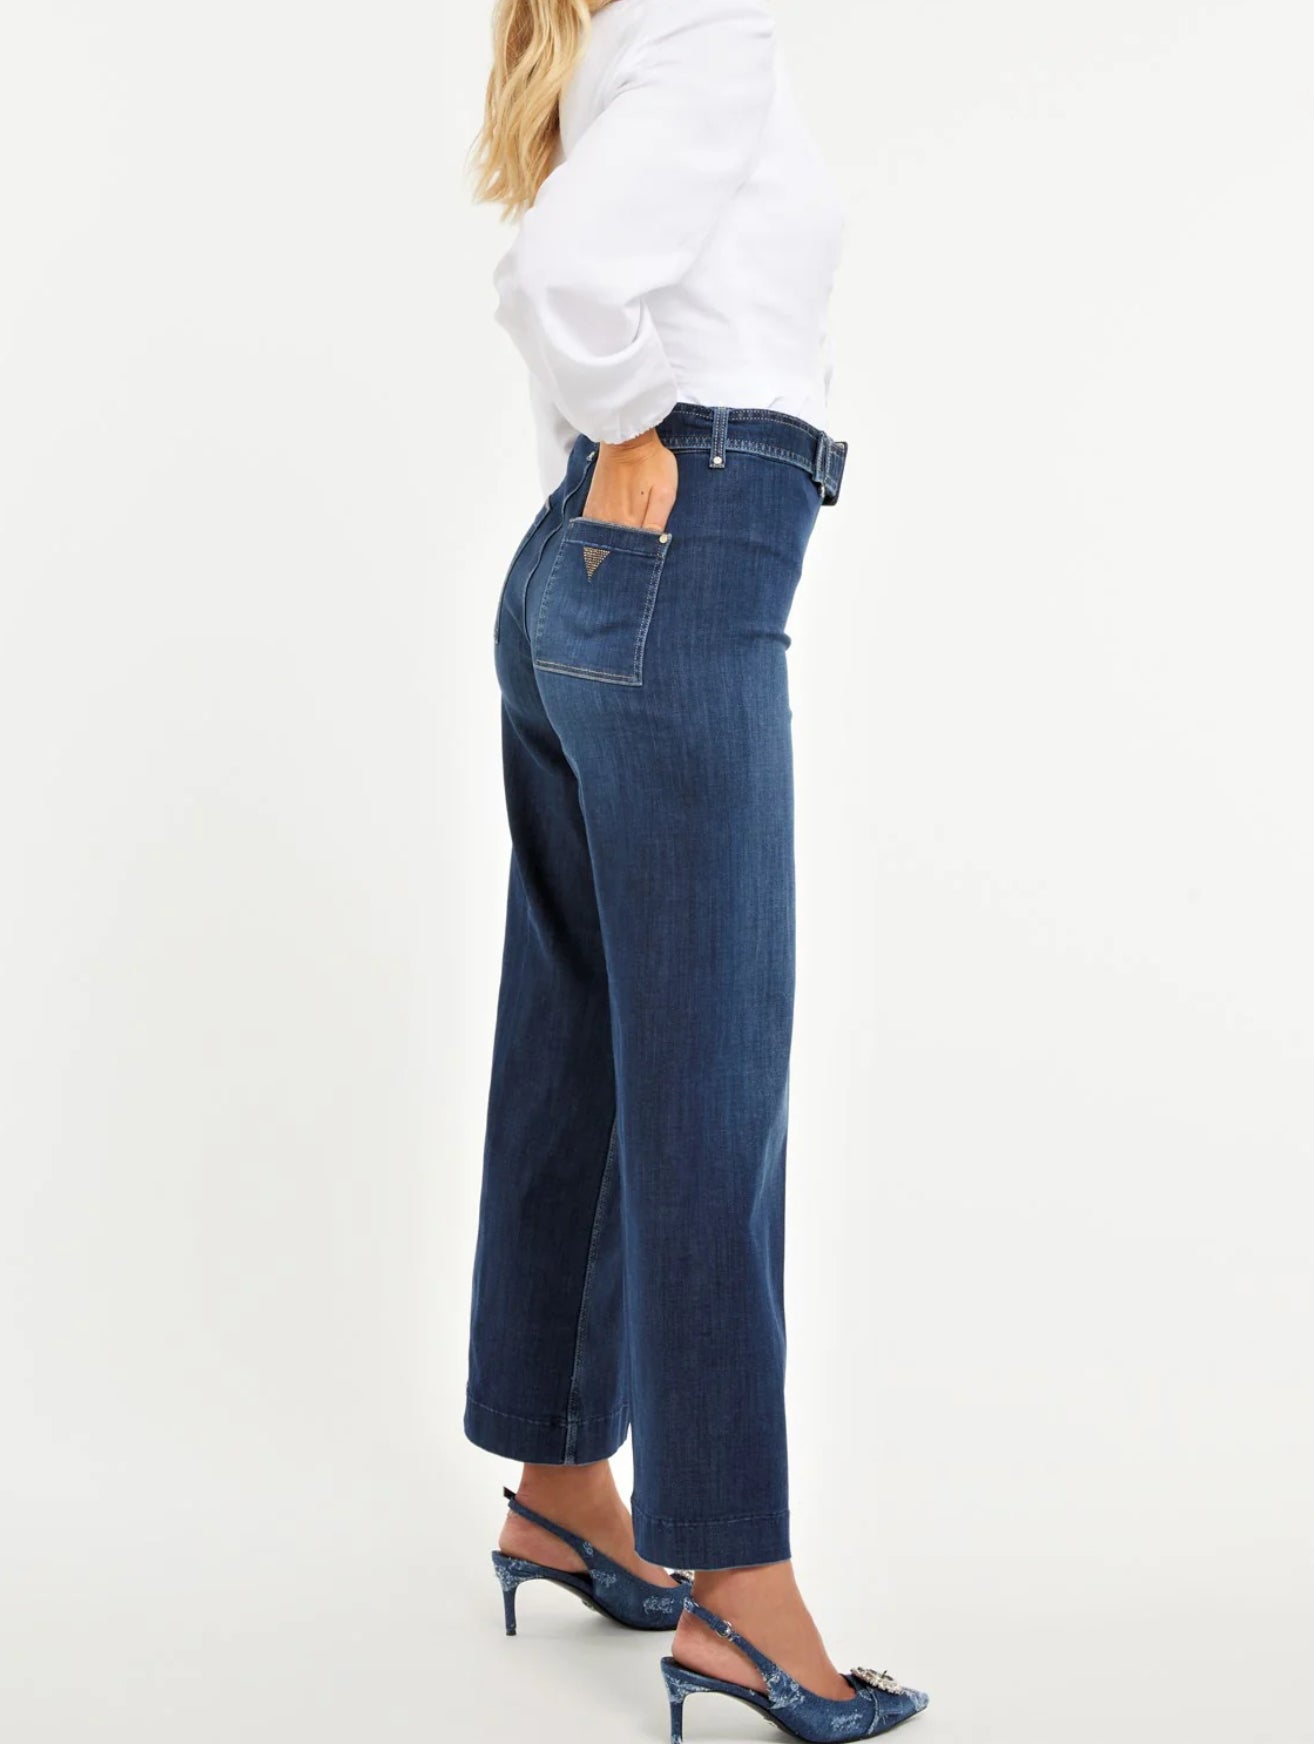 Dakota seamless jeans by Guess - dark wash - Blue Sky Fashions & Lingerie